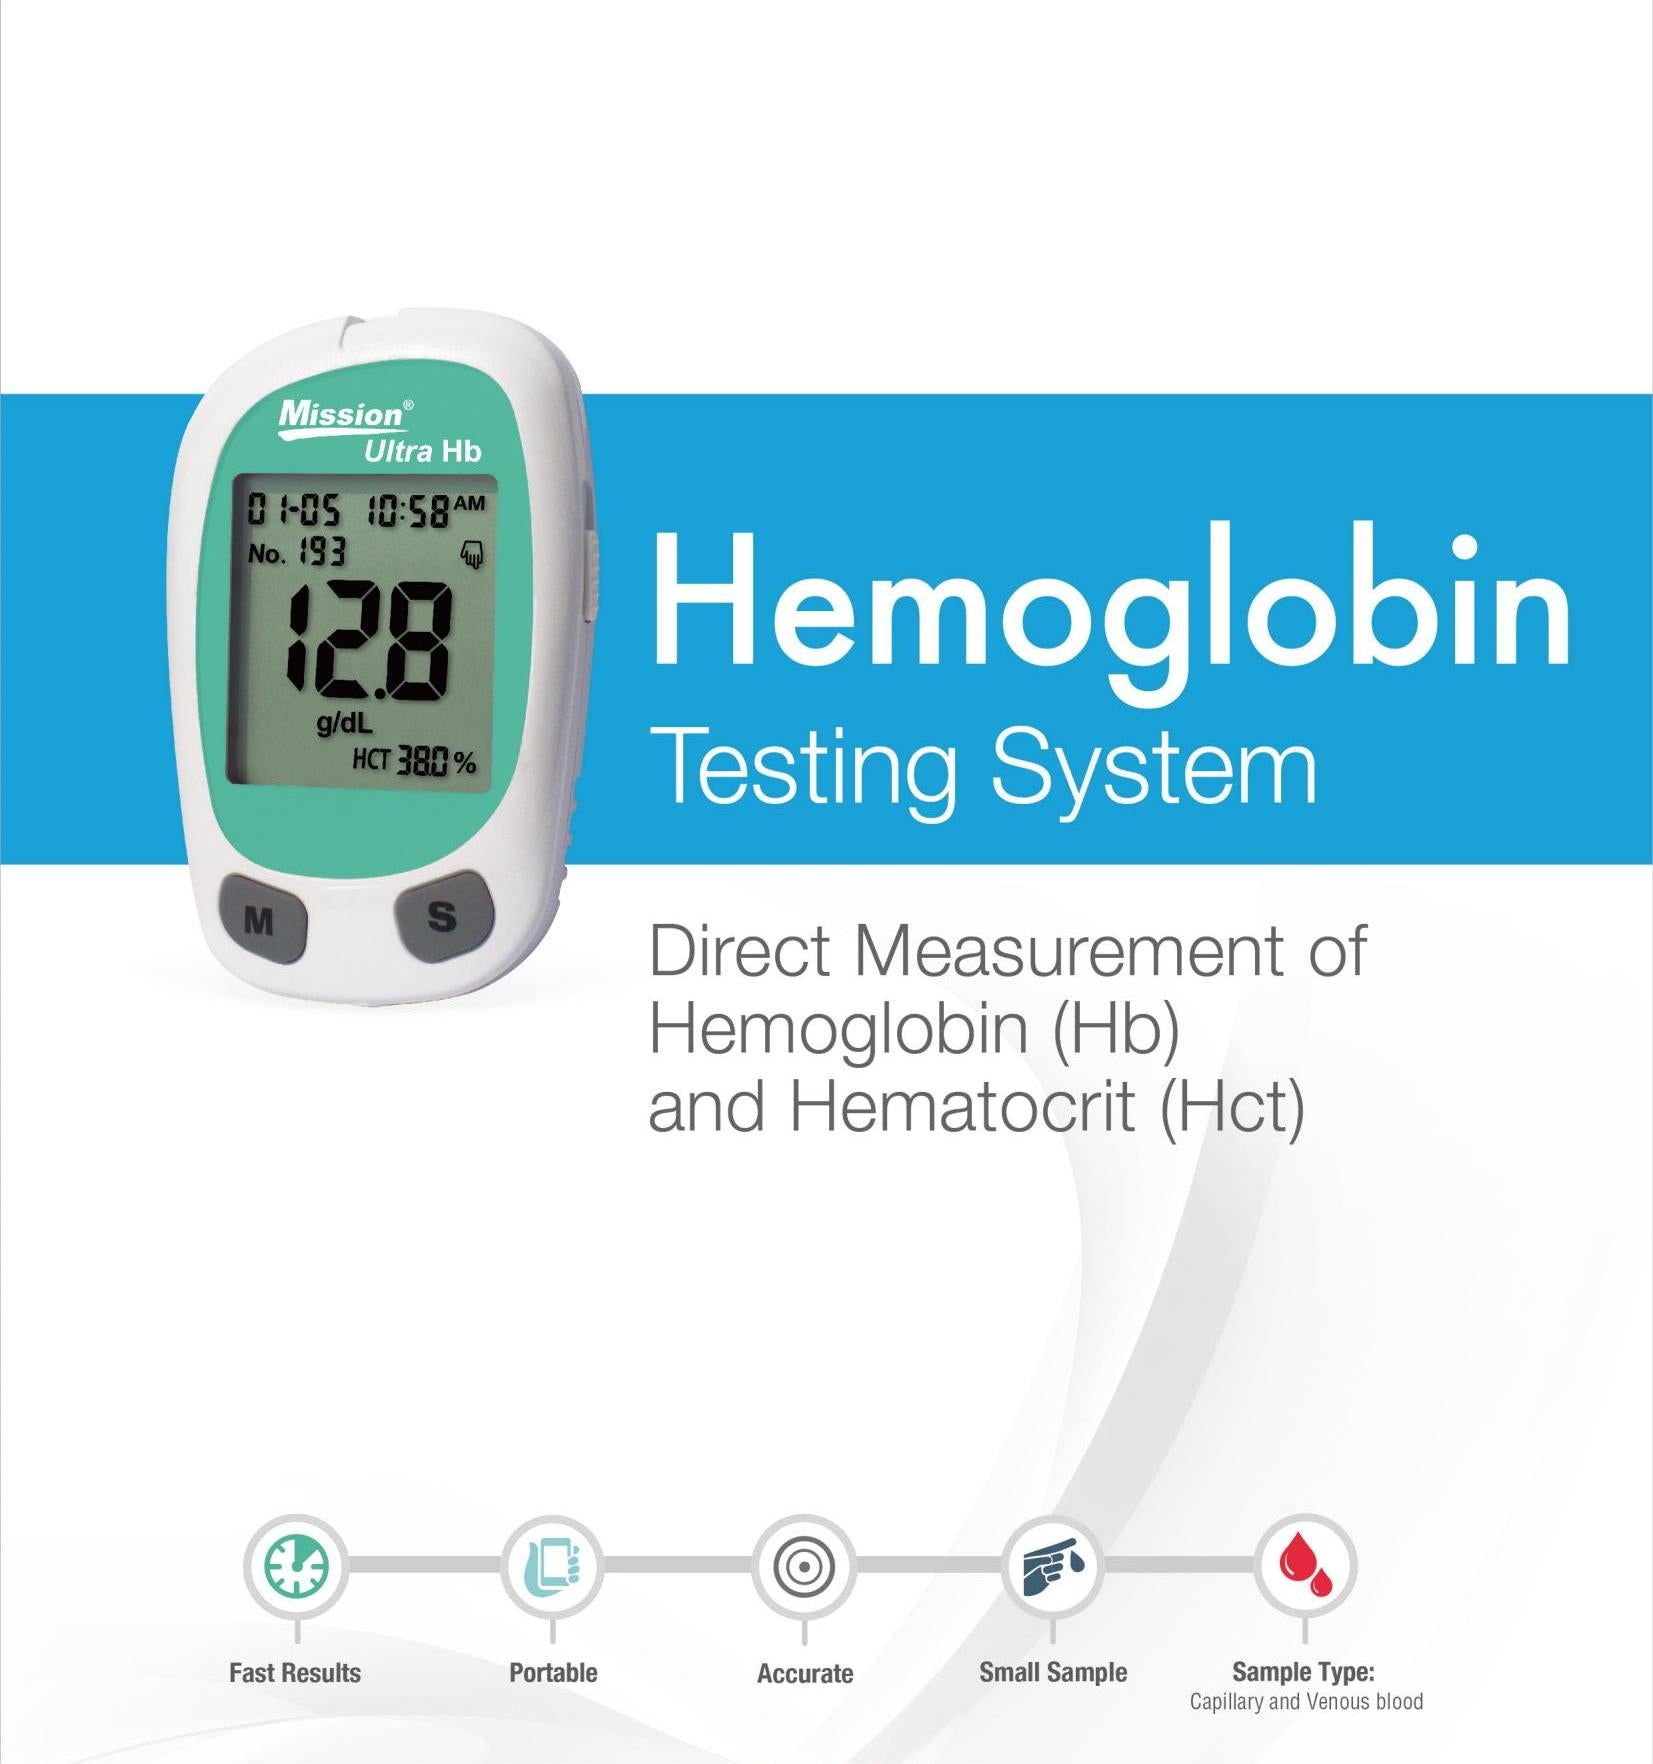 Mission® Ultra Hb Hemoglobin Testing System